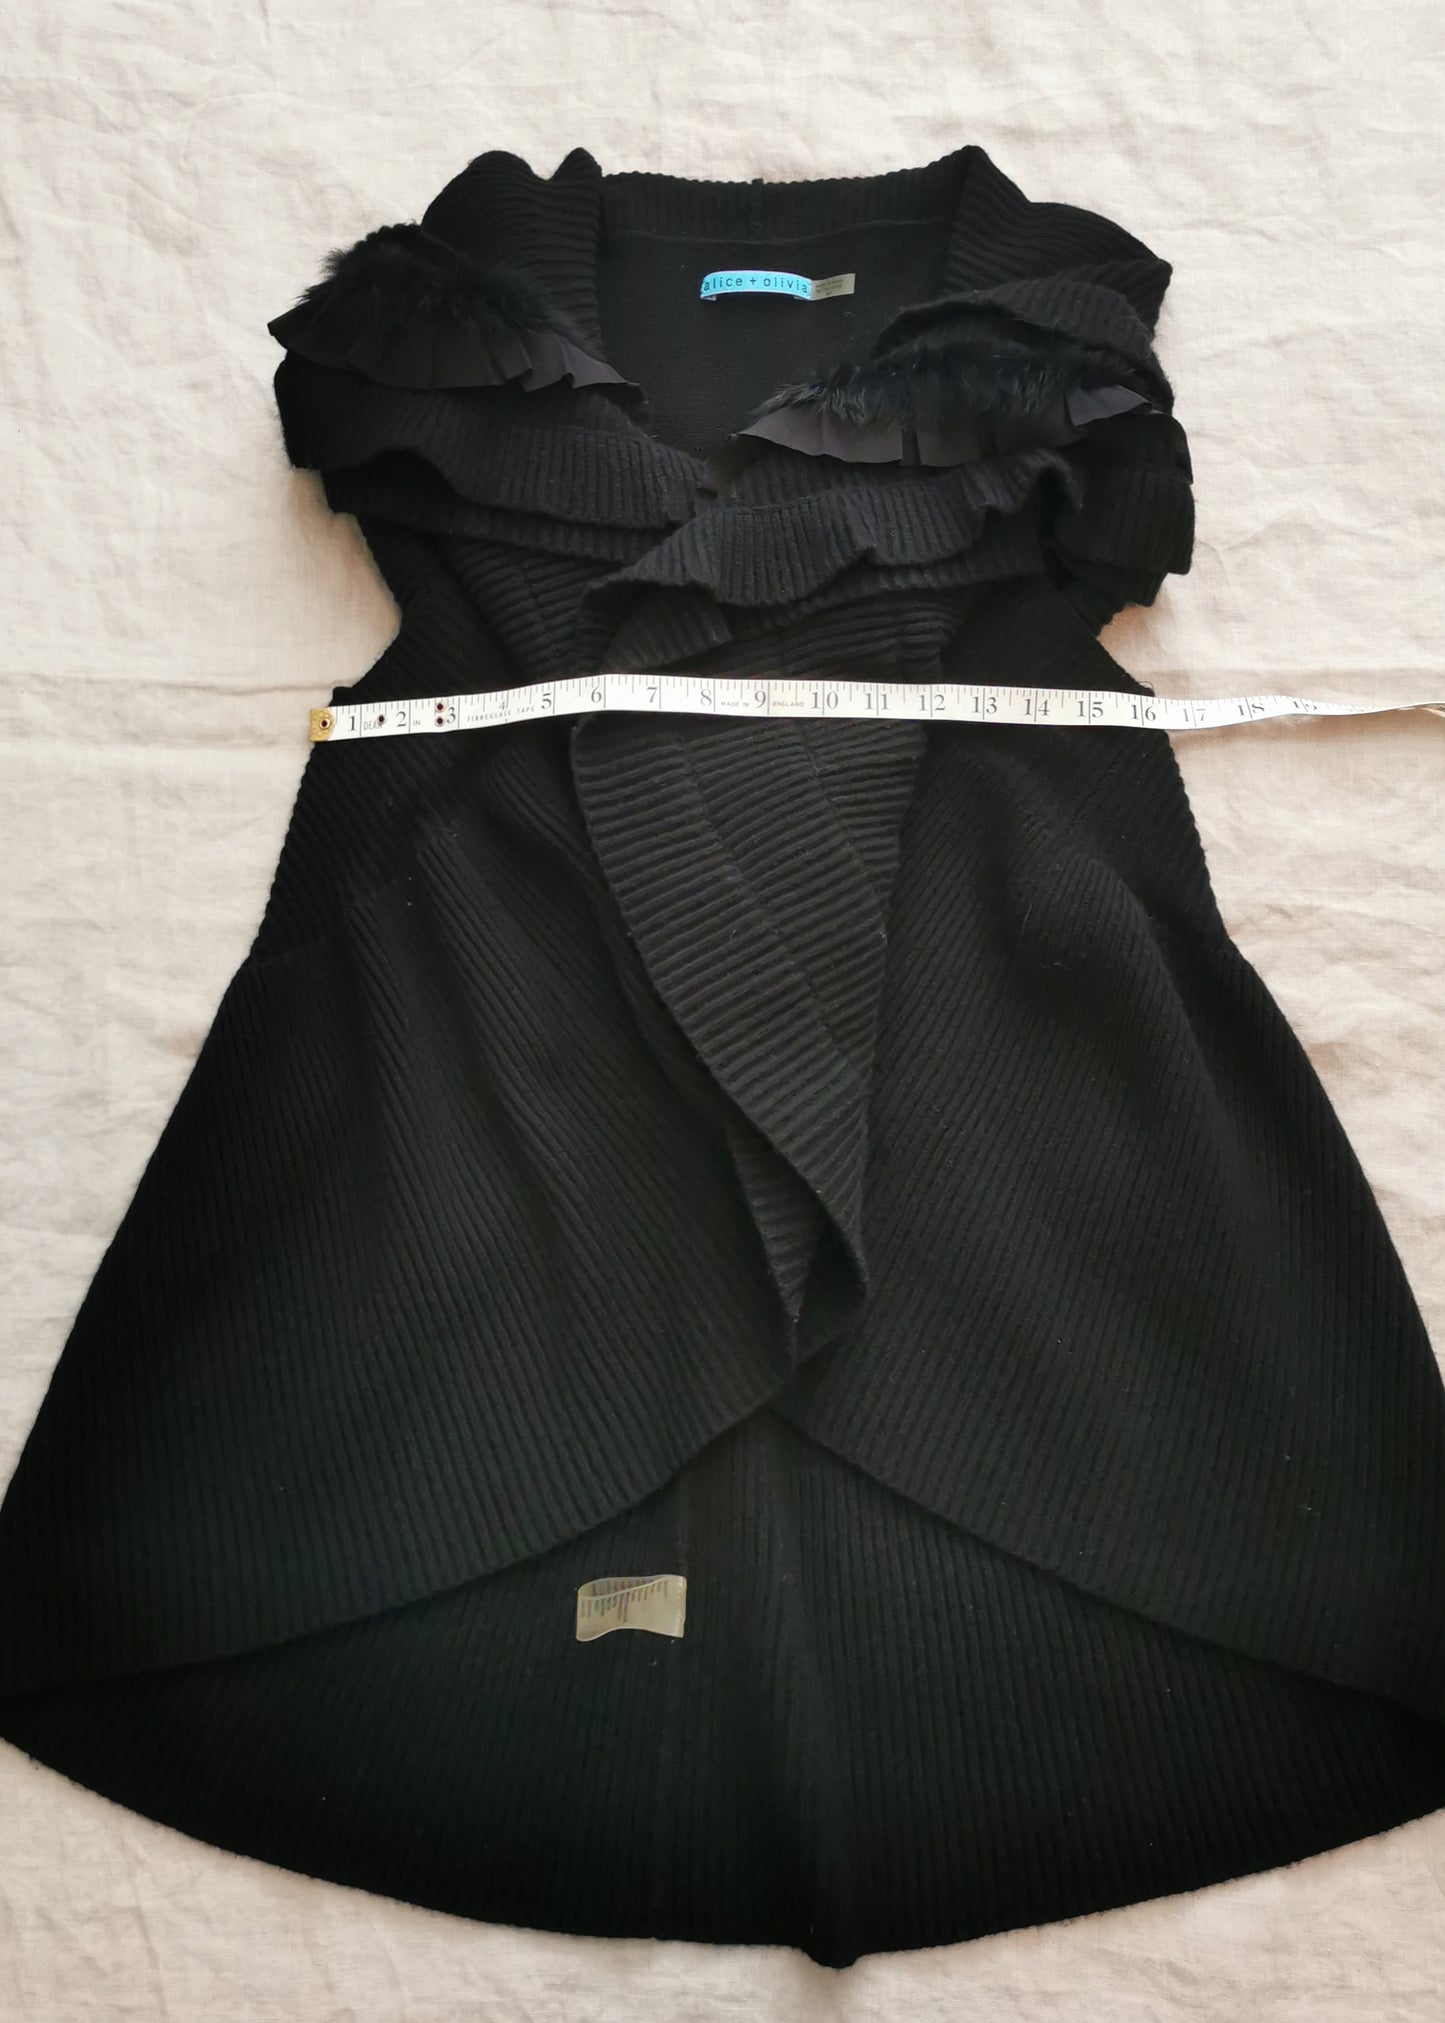 Alice + Olivia Wool & Cashmere Cardigan Vest (S)